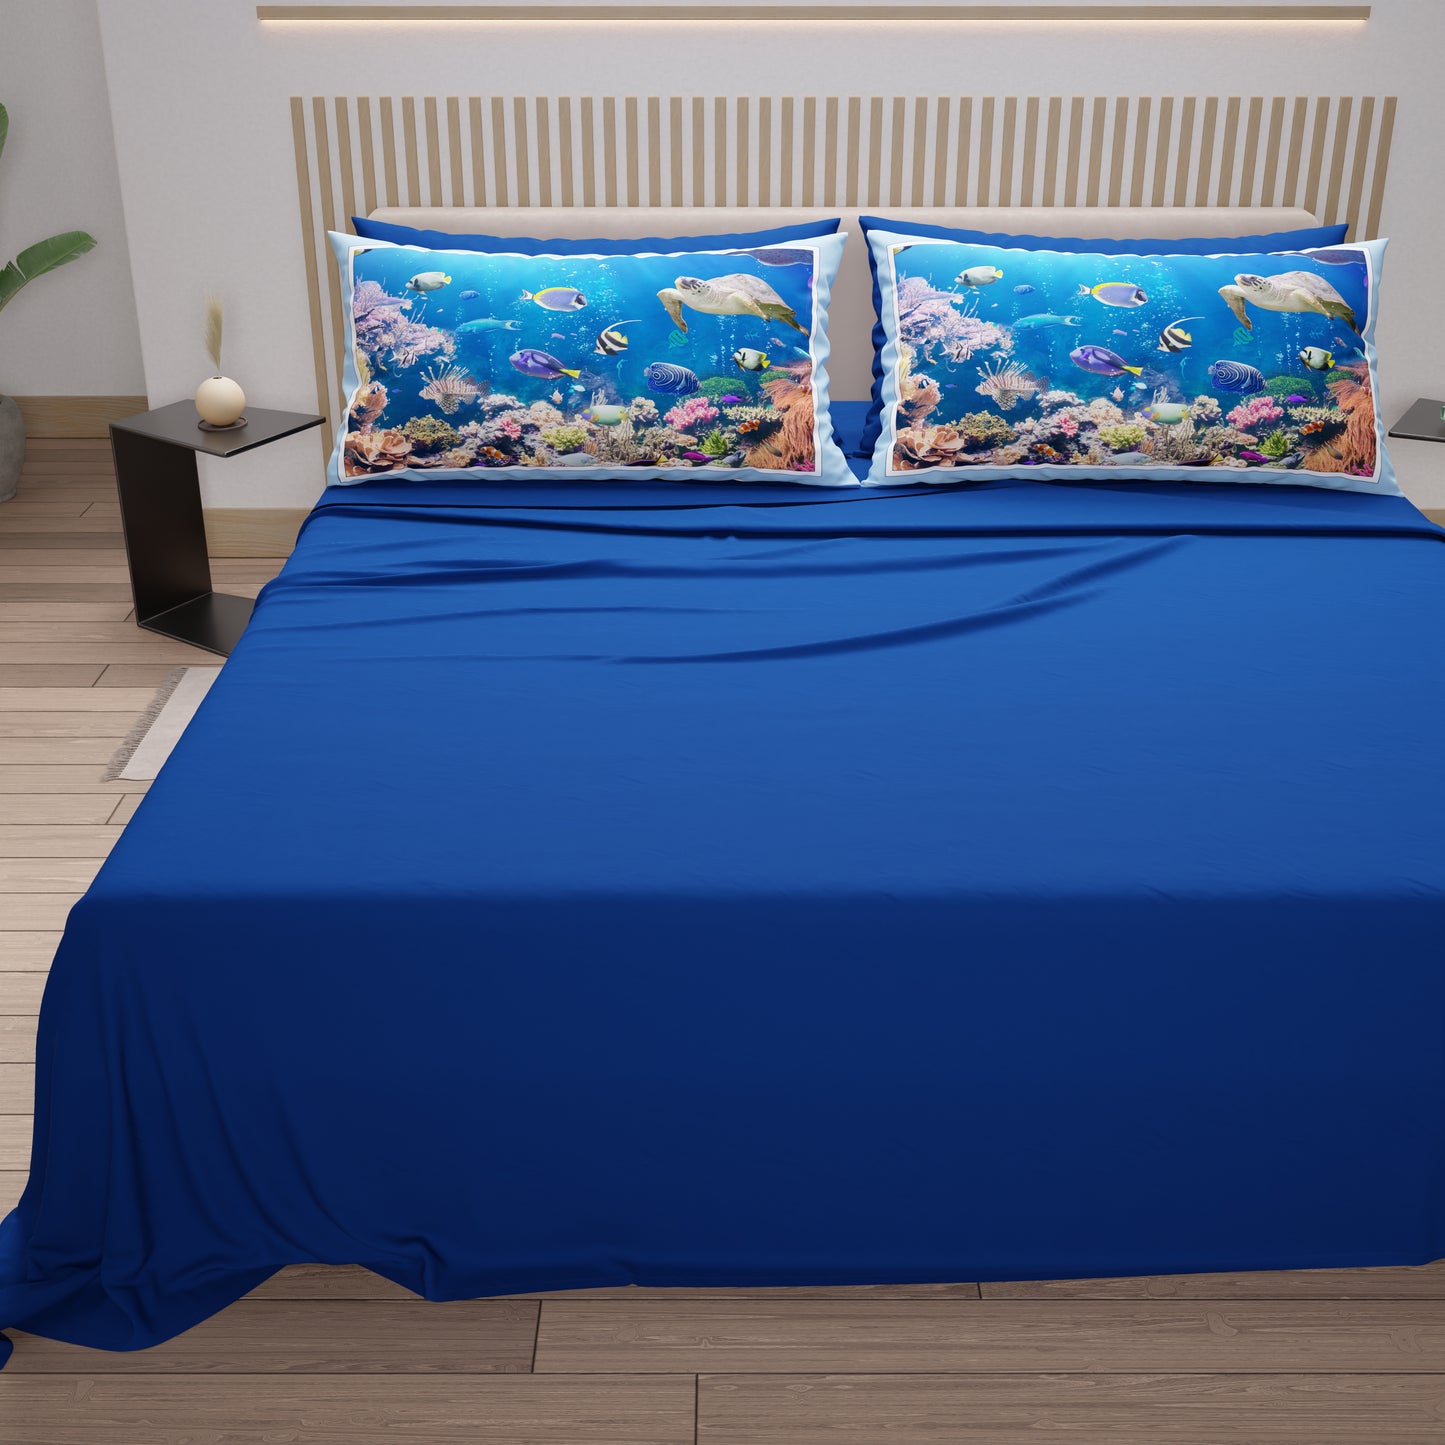 Cotton sheets, bed set with aquarium digital print pillowcases